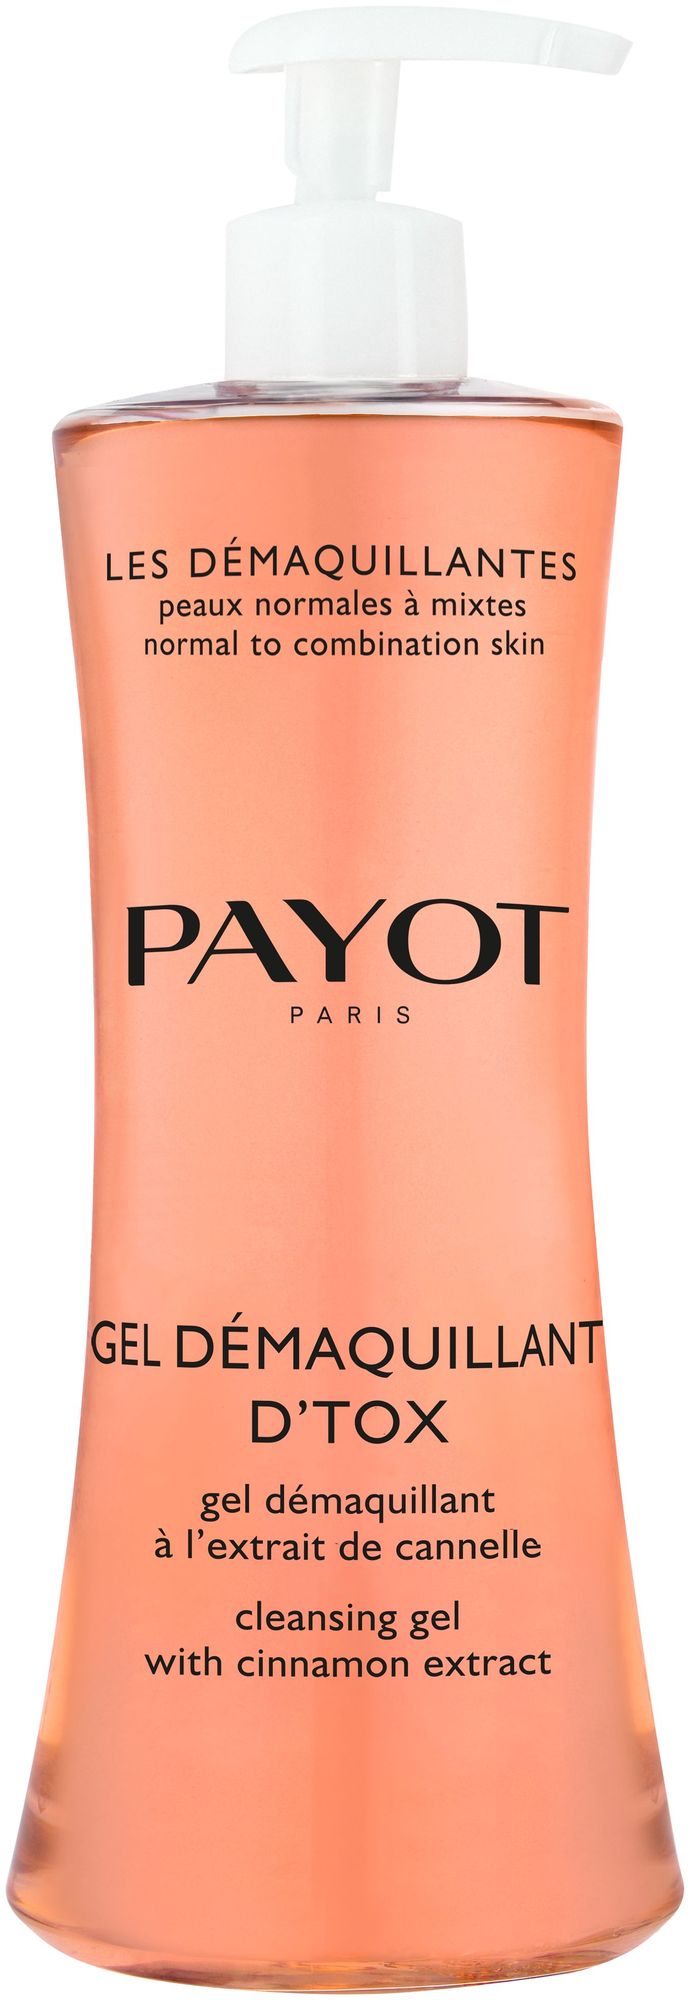 Payot gel. Gel Demaquillant d'Tox. Payot гель-детокс очищающий 200ml. Payot очищающий гель Gel Demaquillant d'Tox. Очищающий гель детокс Payot  для лица.